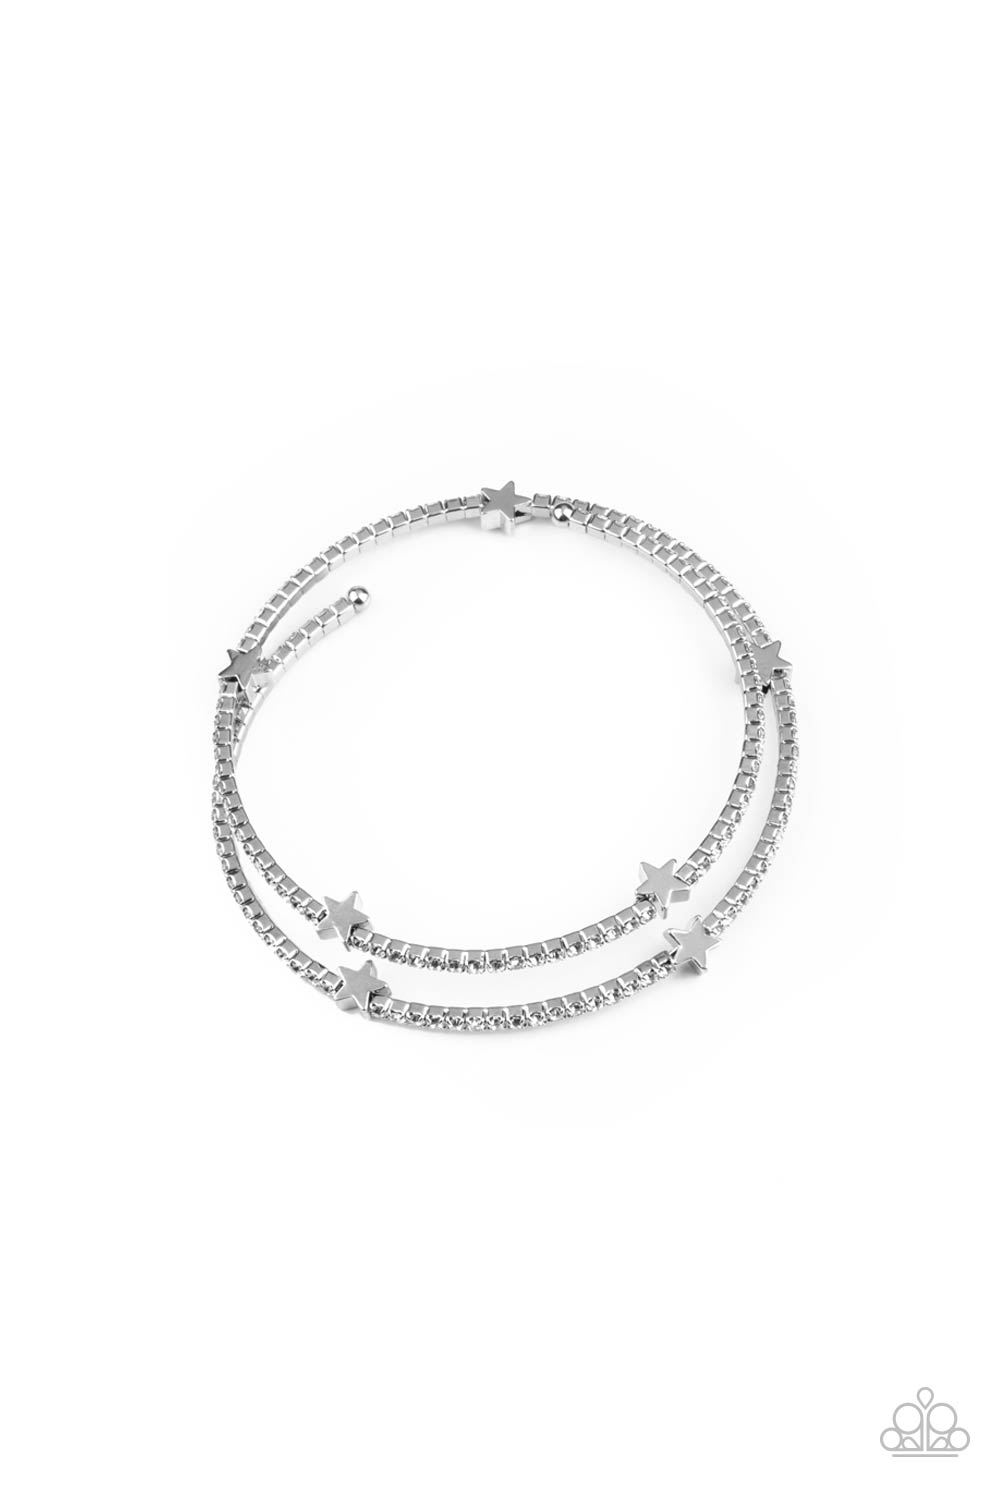 Let Freedom BLING - Paparazzi - White Rhinestone Silver Star Charm Coil Bracelet